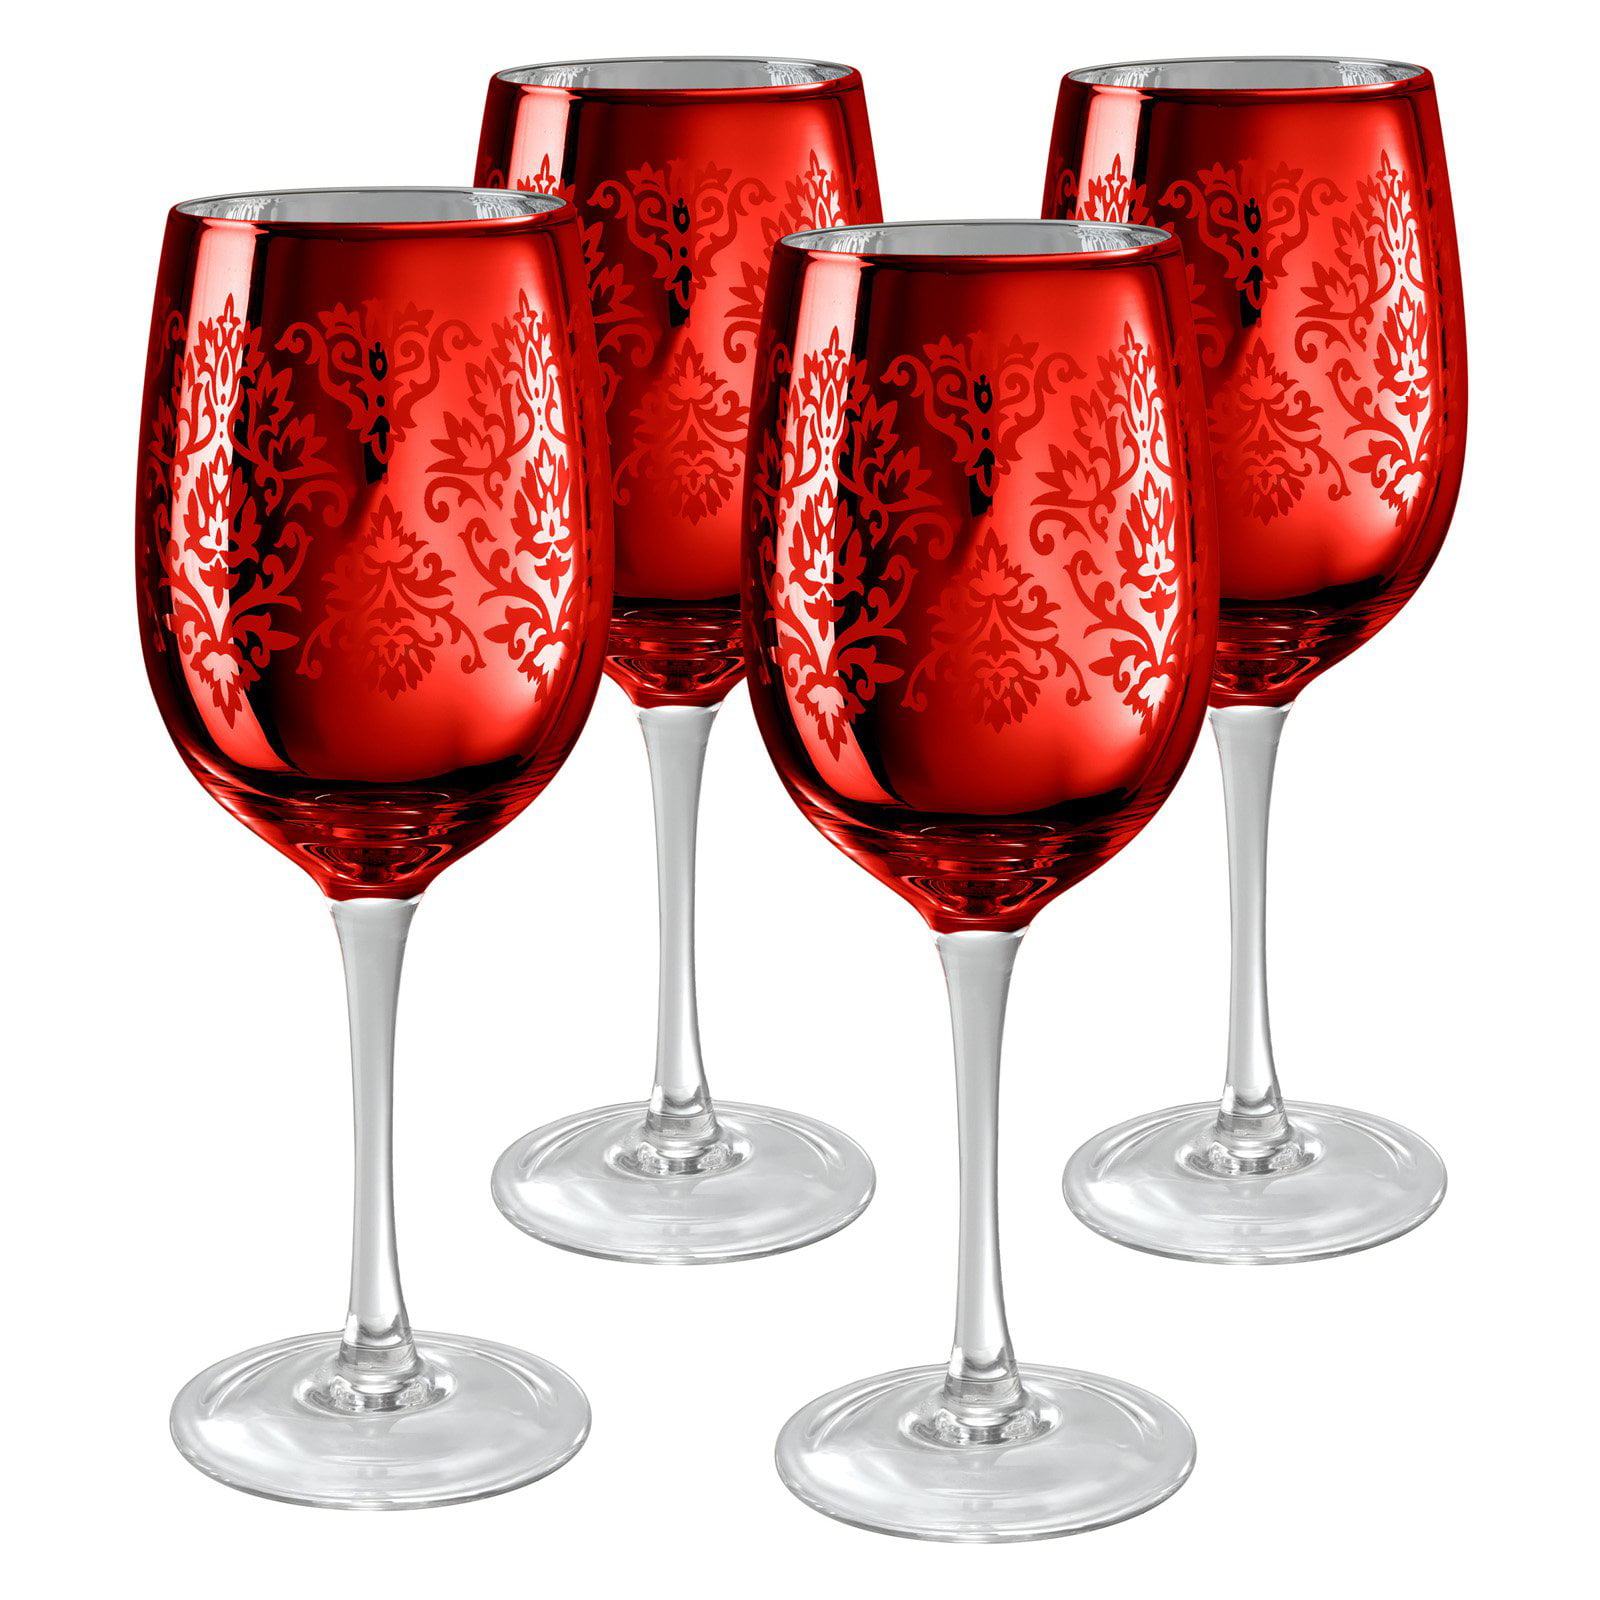 Artland Inc. Red Brocade Wine Glasses - Set of 4 